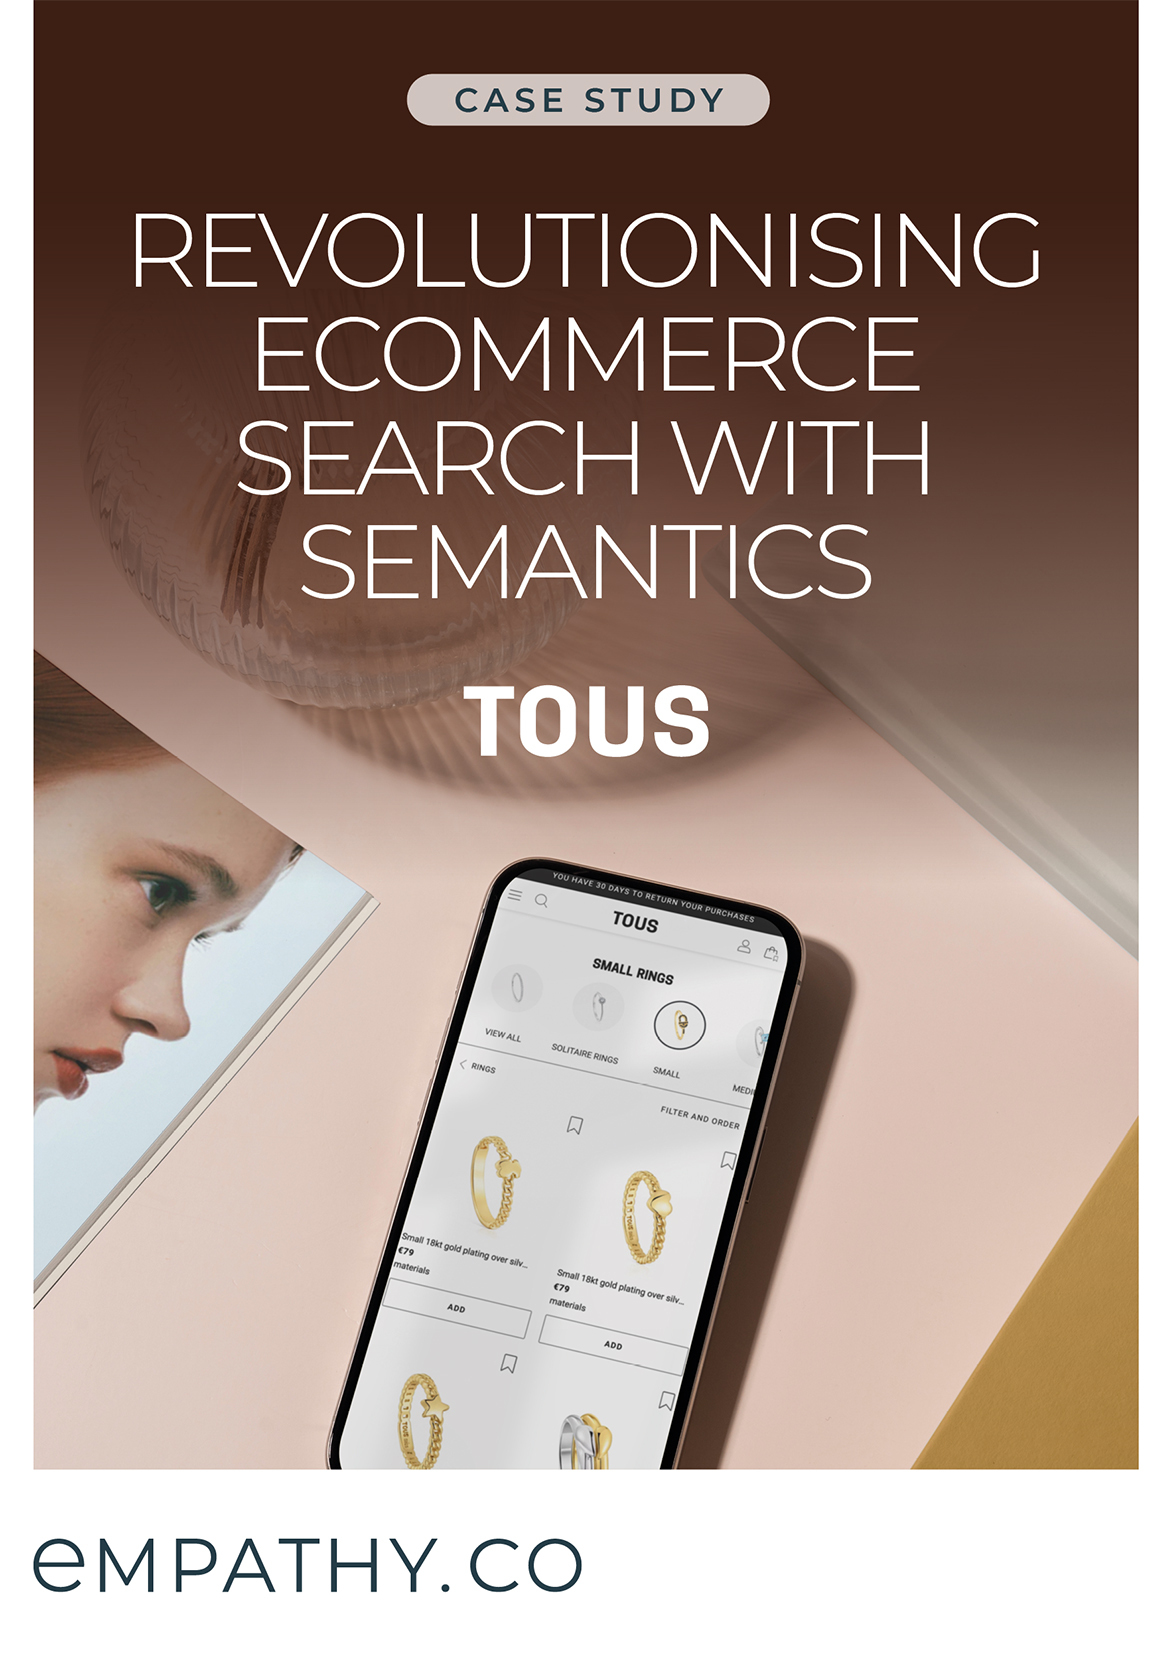 TOUS: Revolutionising Ecommerce Search with Semantics